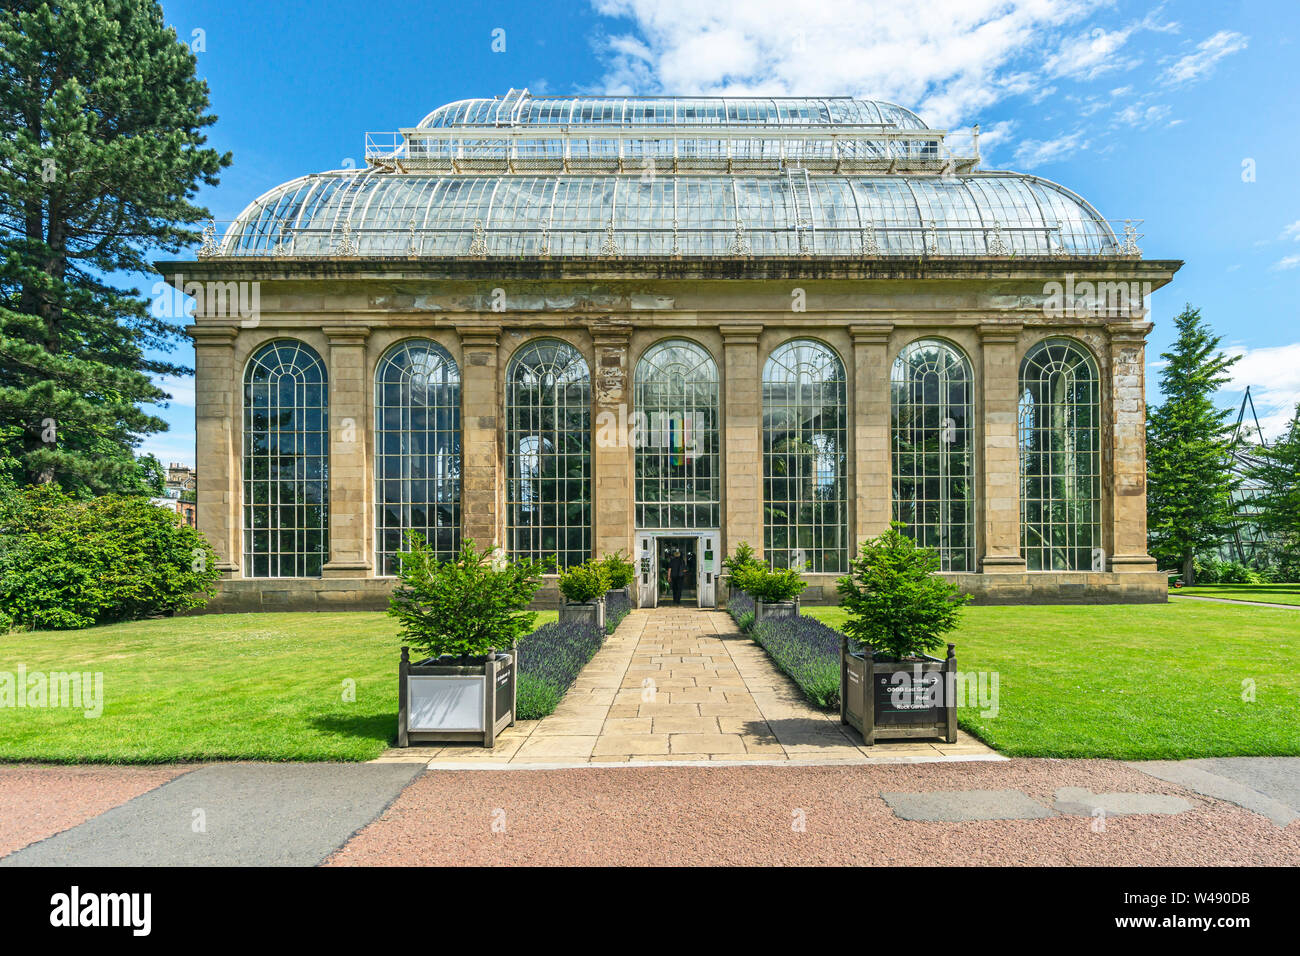 Entrance to The victorian temperate palm house at the Royal Botanic Garden Edinburgh Scotland UK Stock Photo